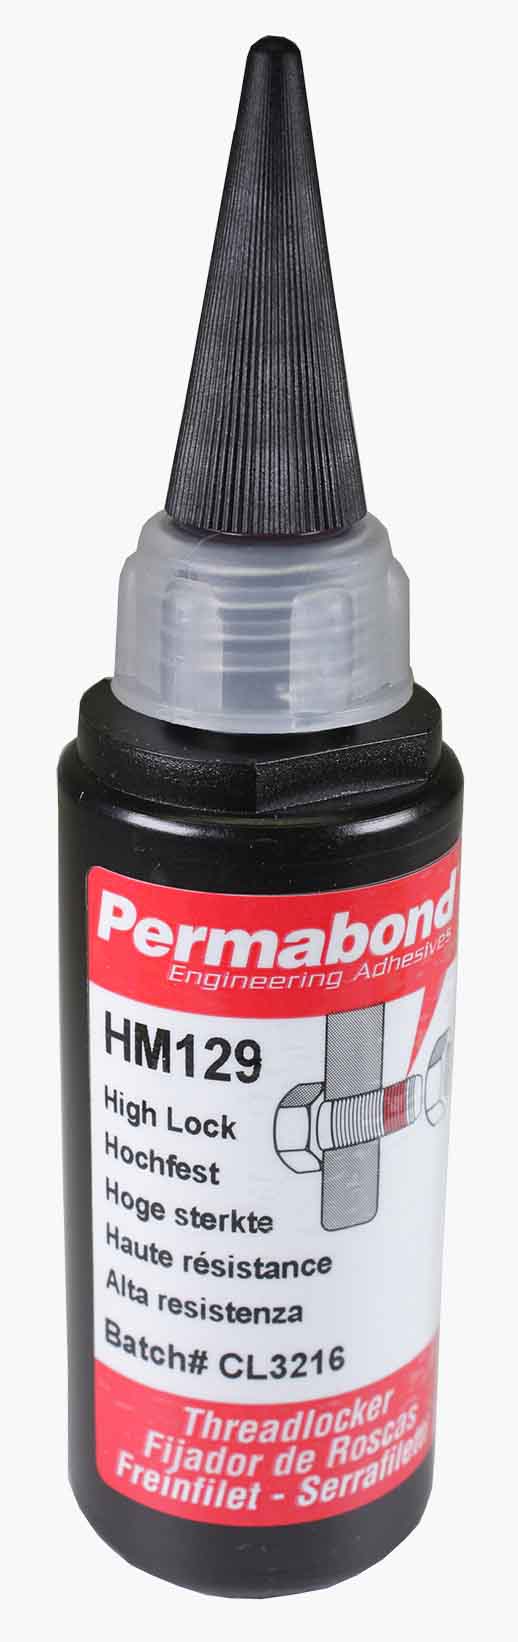 Permabond HM129